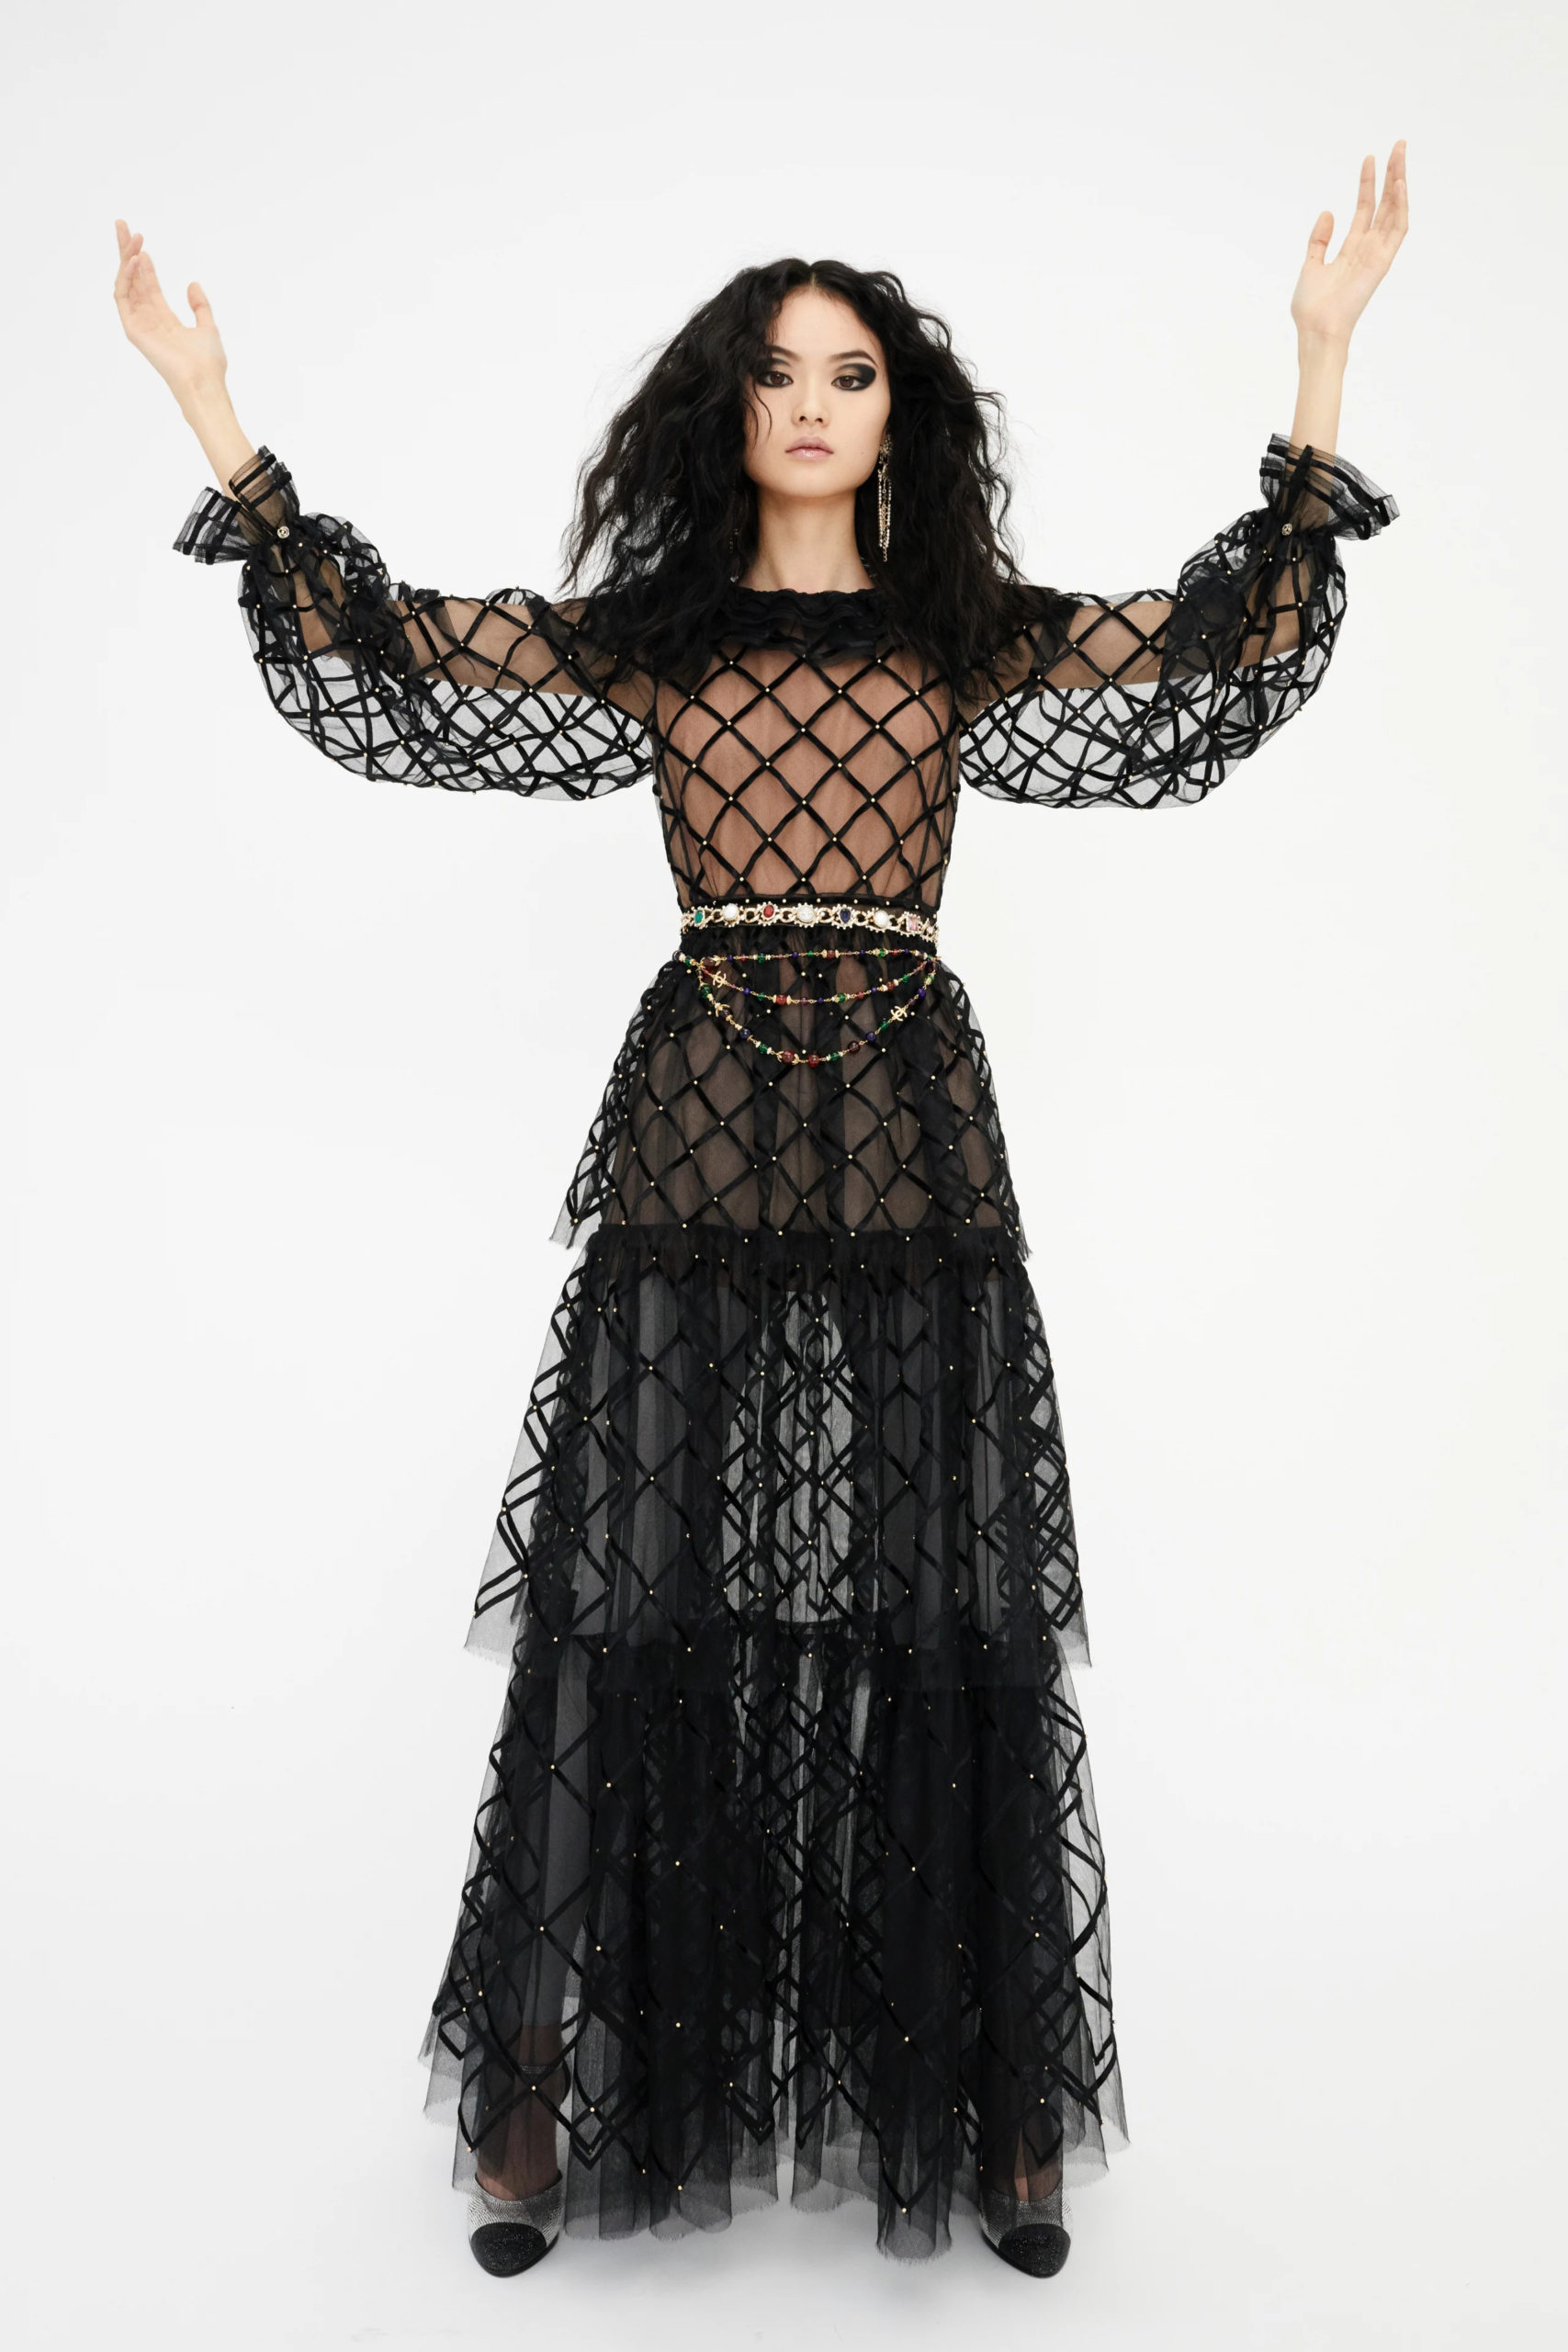 Chanel Dresses The Ladies' Castle - V Magazine